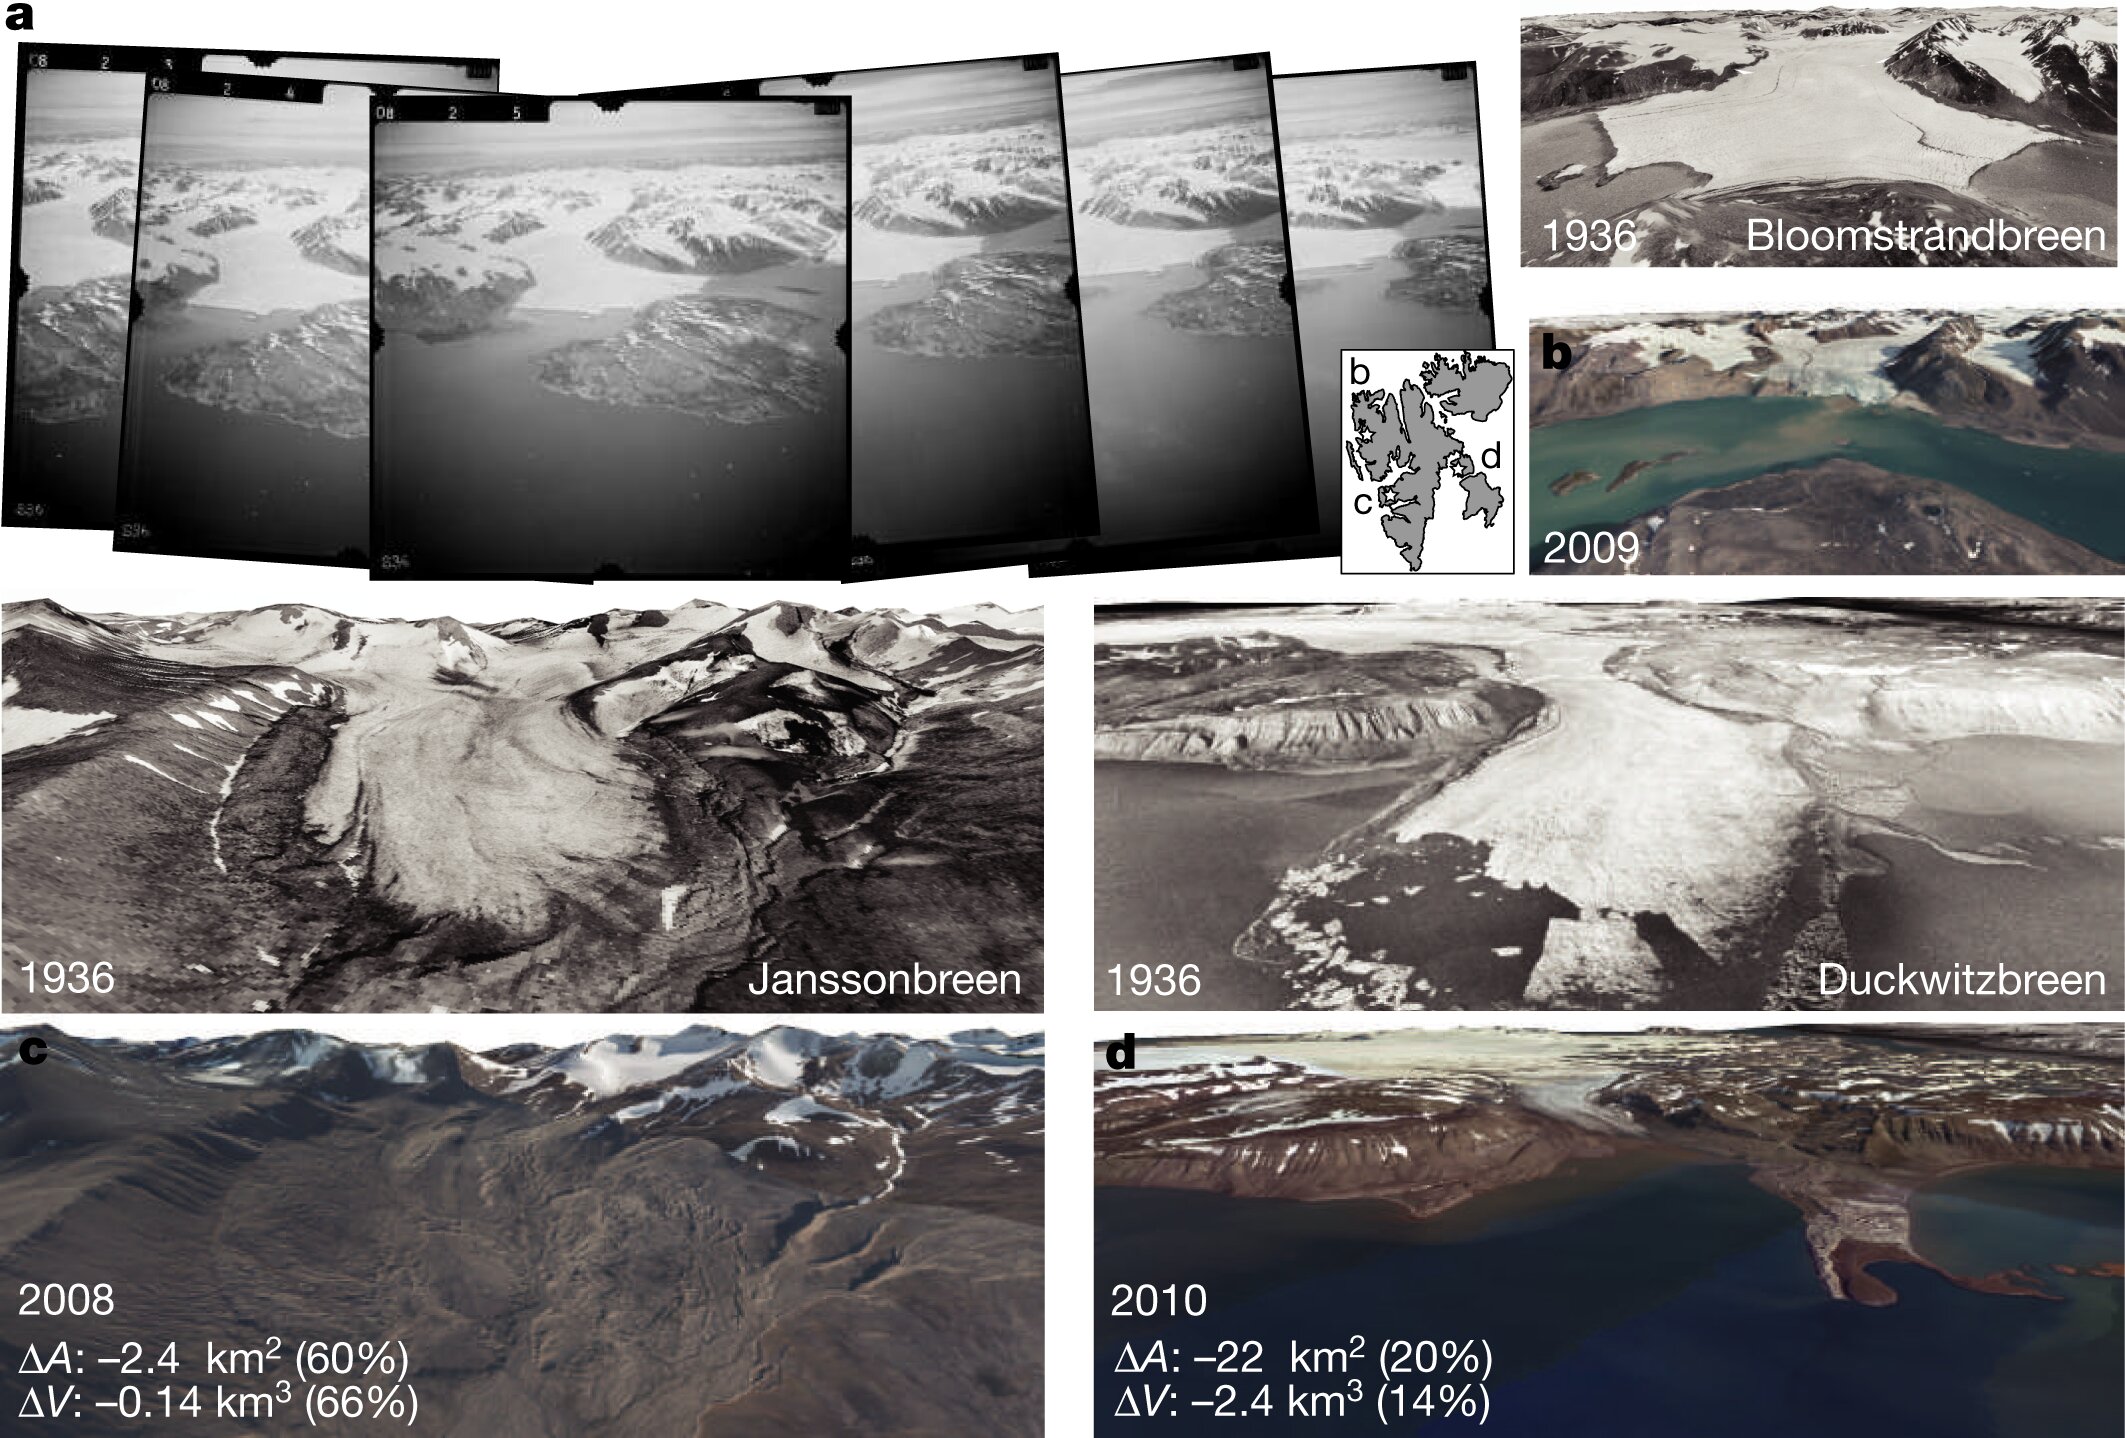 Historical study of Norwegian archipelago Svalbard shows rate of melting glaciers speeding up